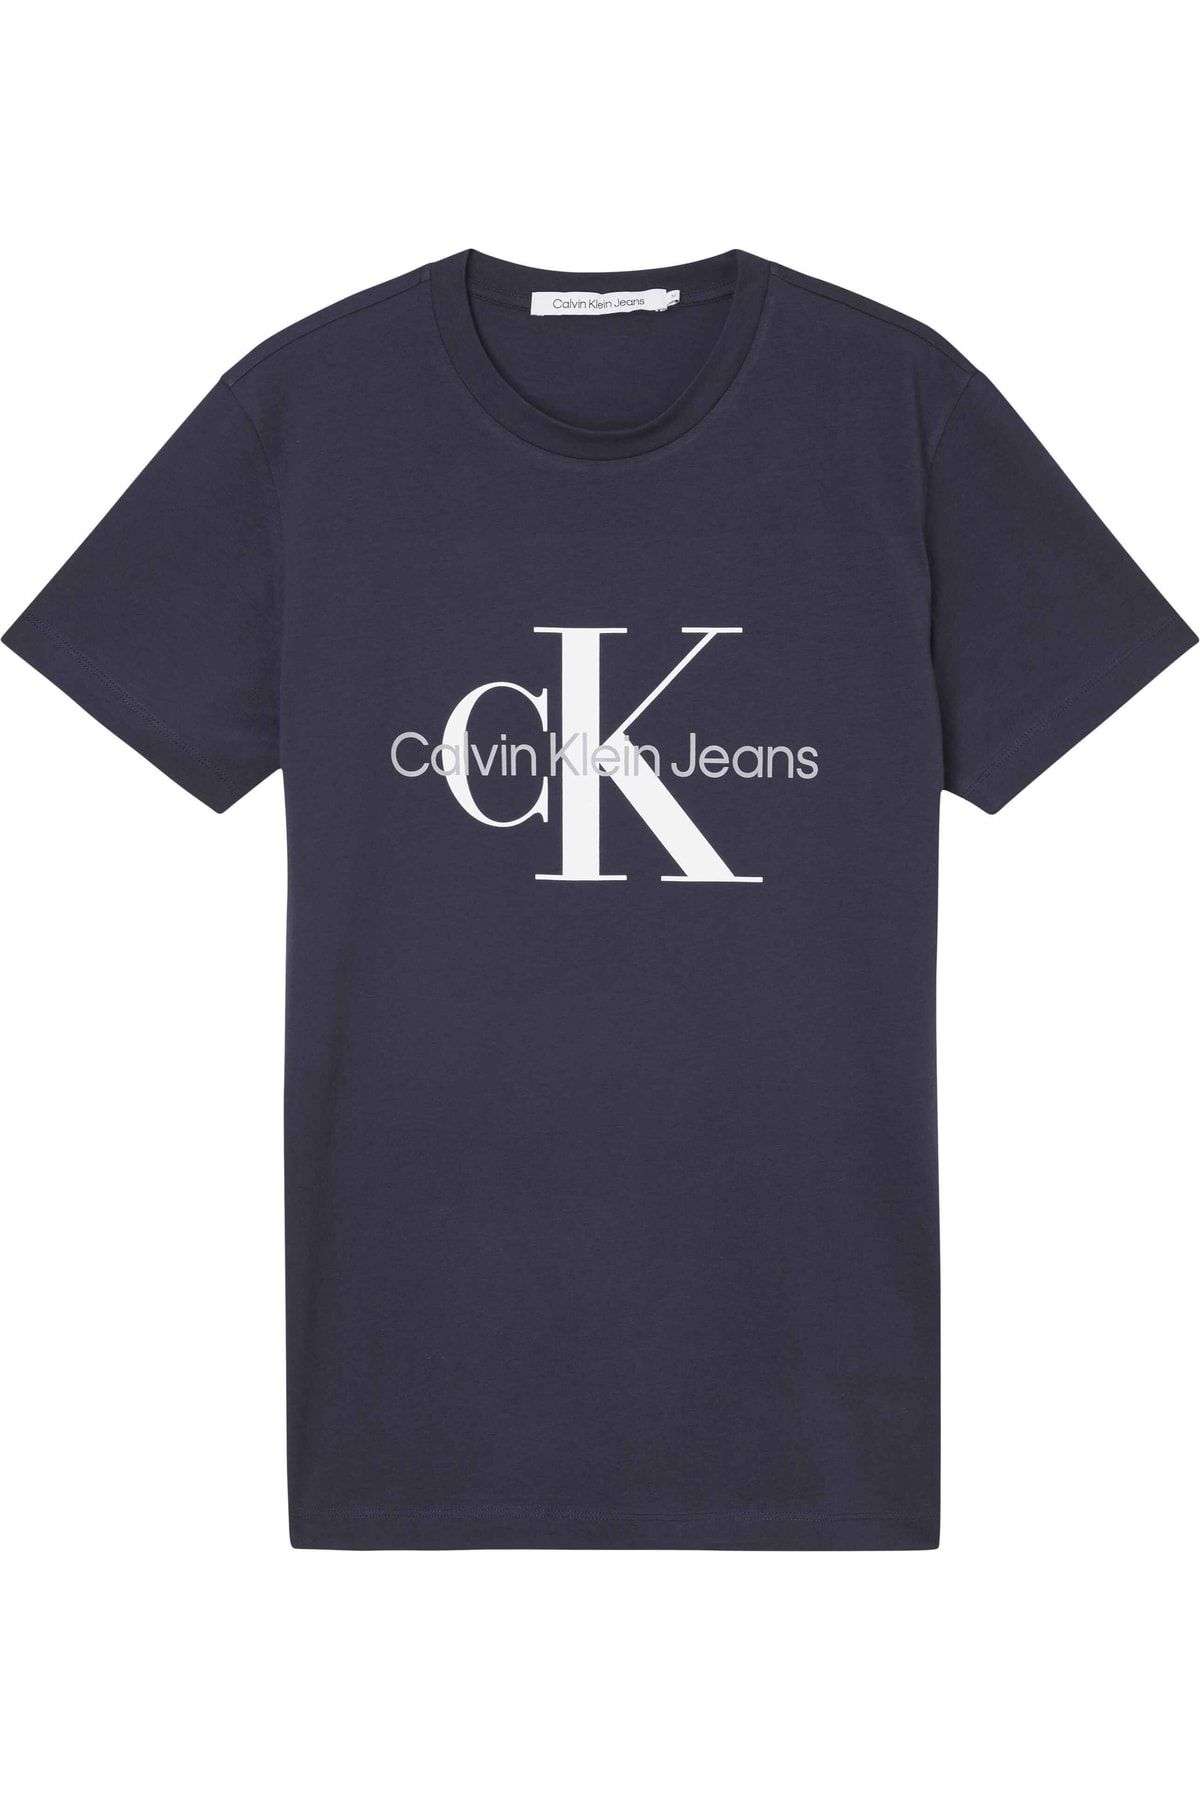 Calvin Klein Slim Fit Crew Neck Cotton T Shirt Men's T Shirt J30j320935 Chw  - Trendyol